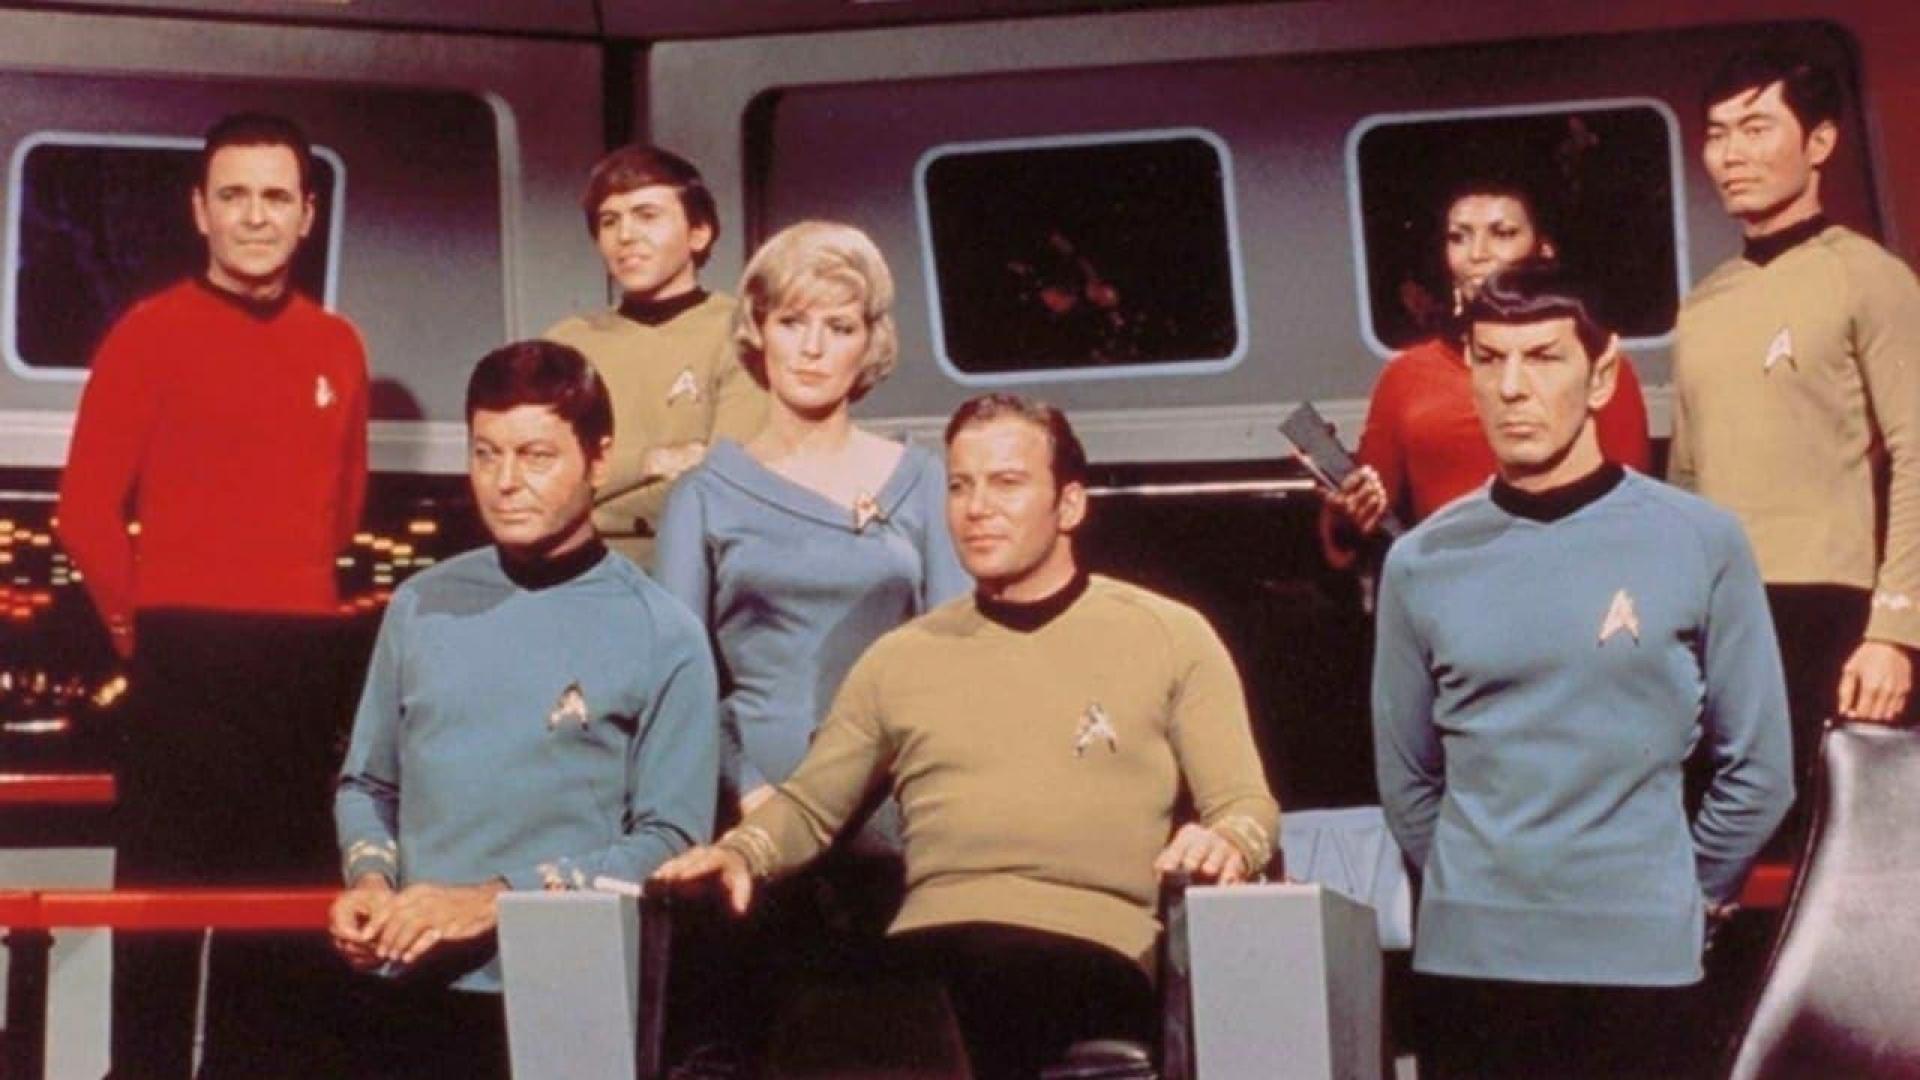 دانلود سریال Star Trek: The Original Series